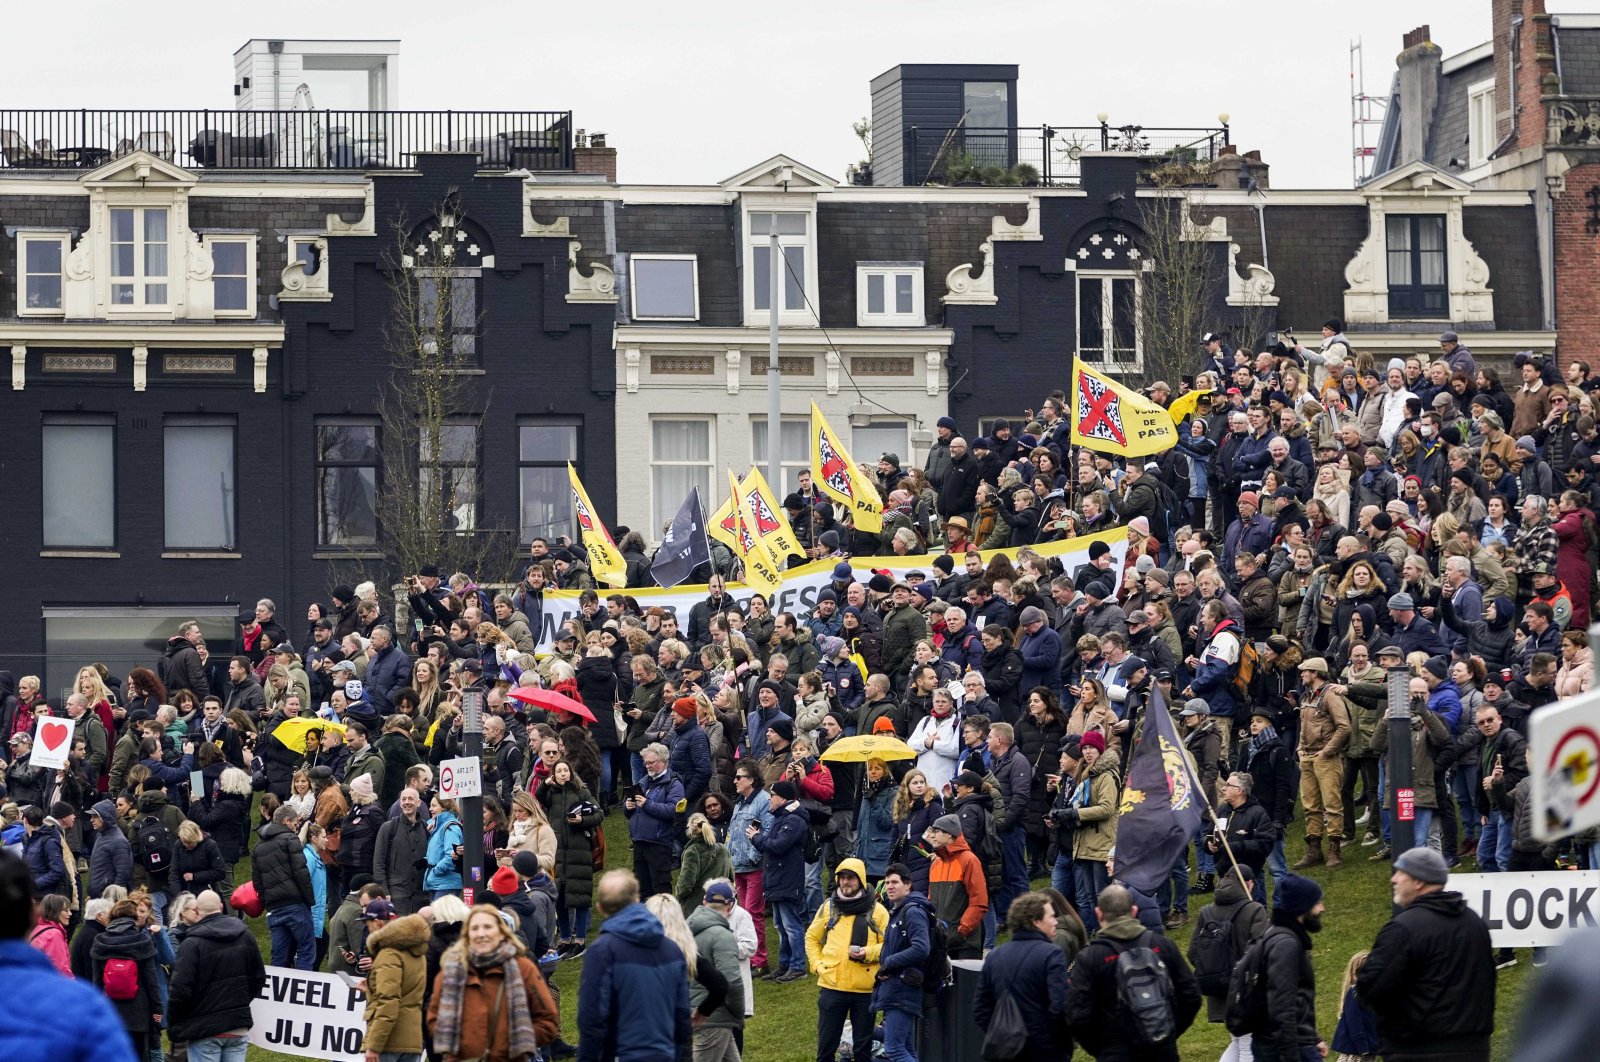 Ribuan orang turun ke jalan untuk memprotes kebijakan COVID-19 Belanda